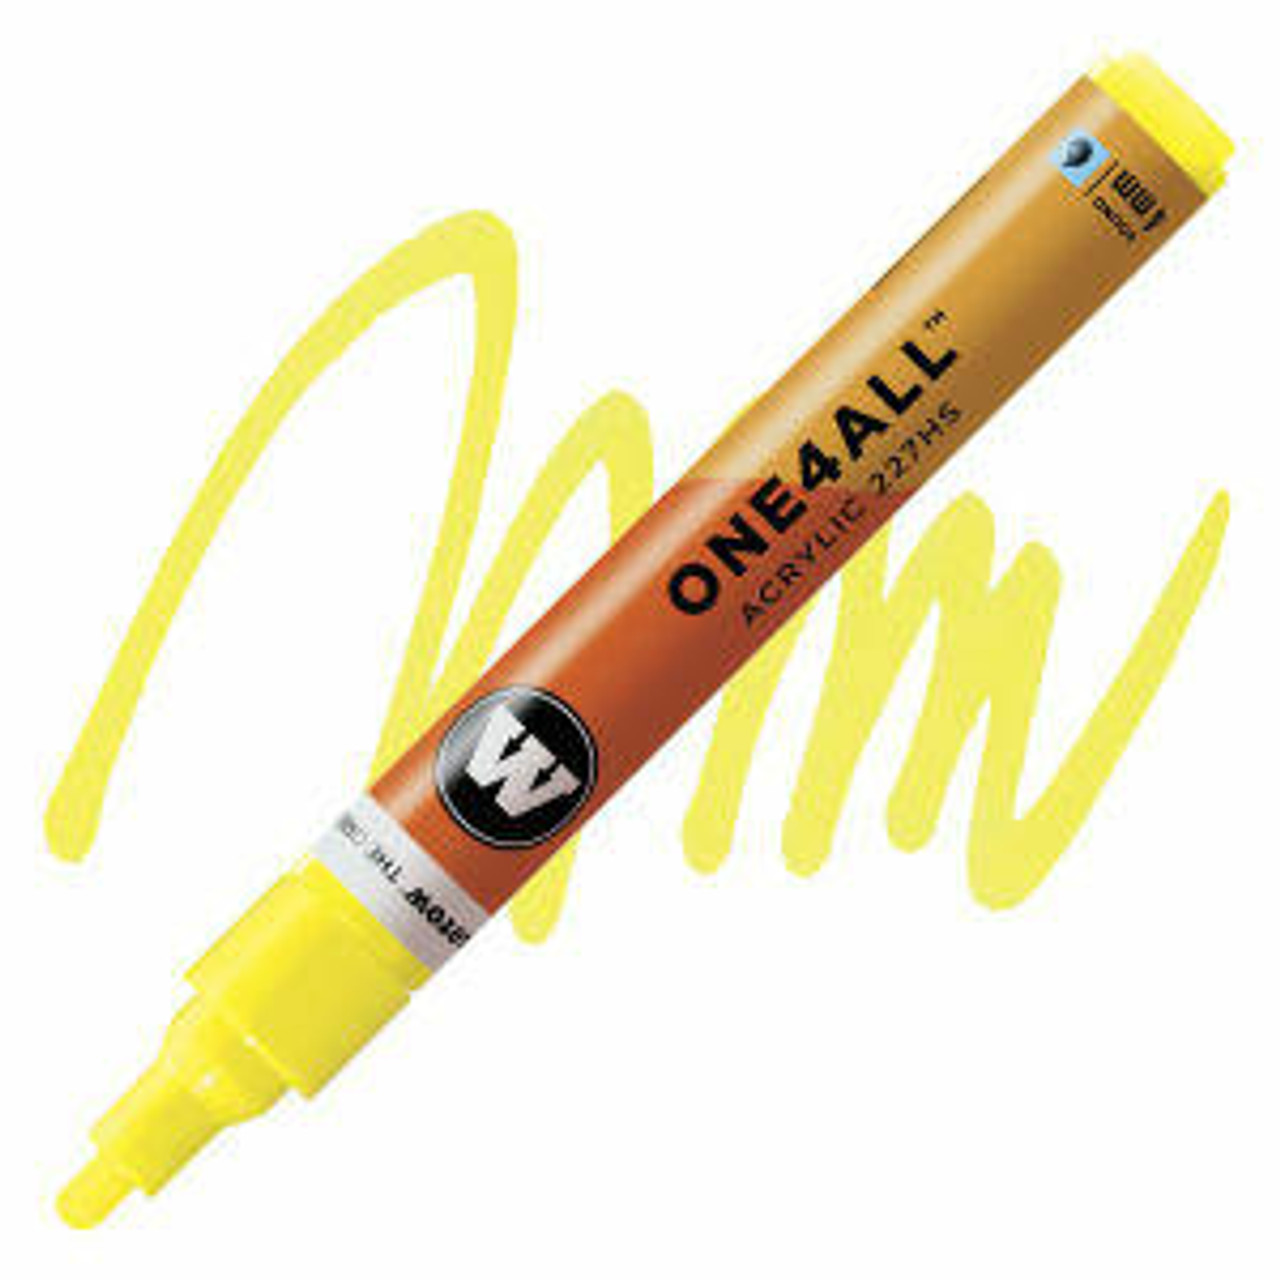 Hot Sale Custom Glow in The Dark Draw Acrylic Paint Marker Pen - China  Acrylic Marker, Acrylic Paint Pens